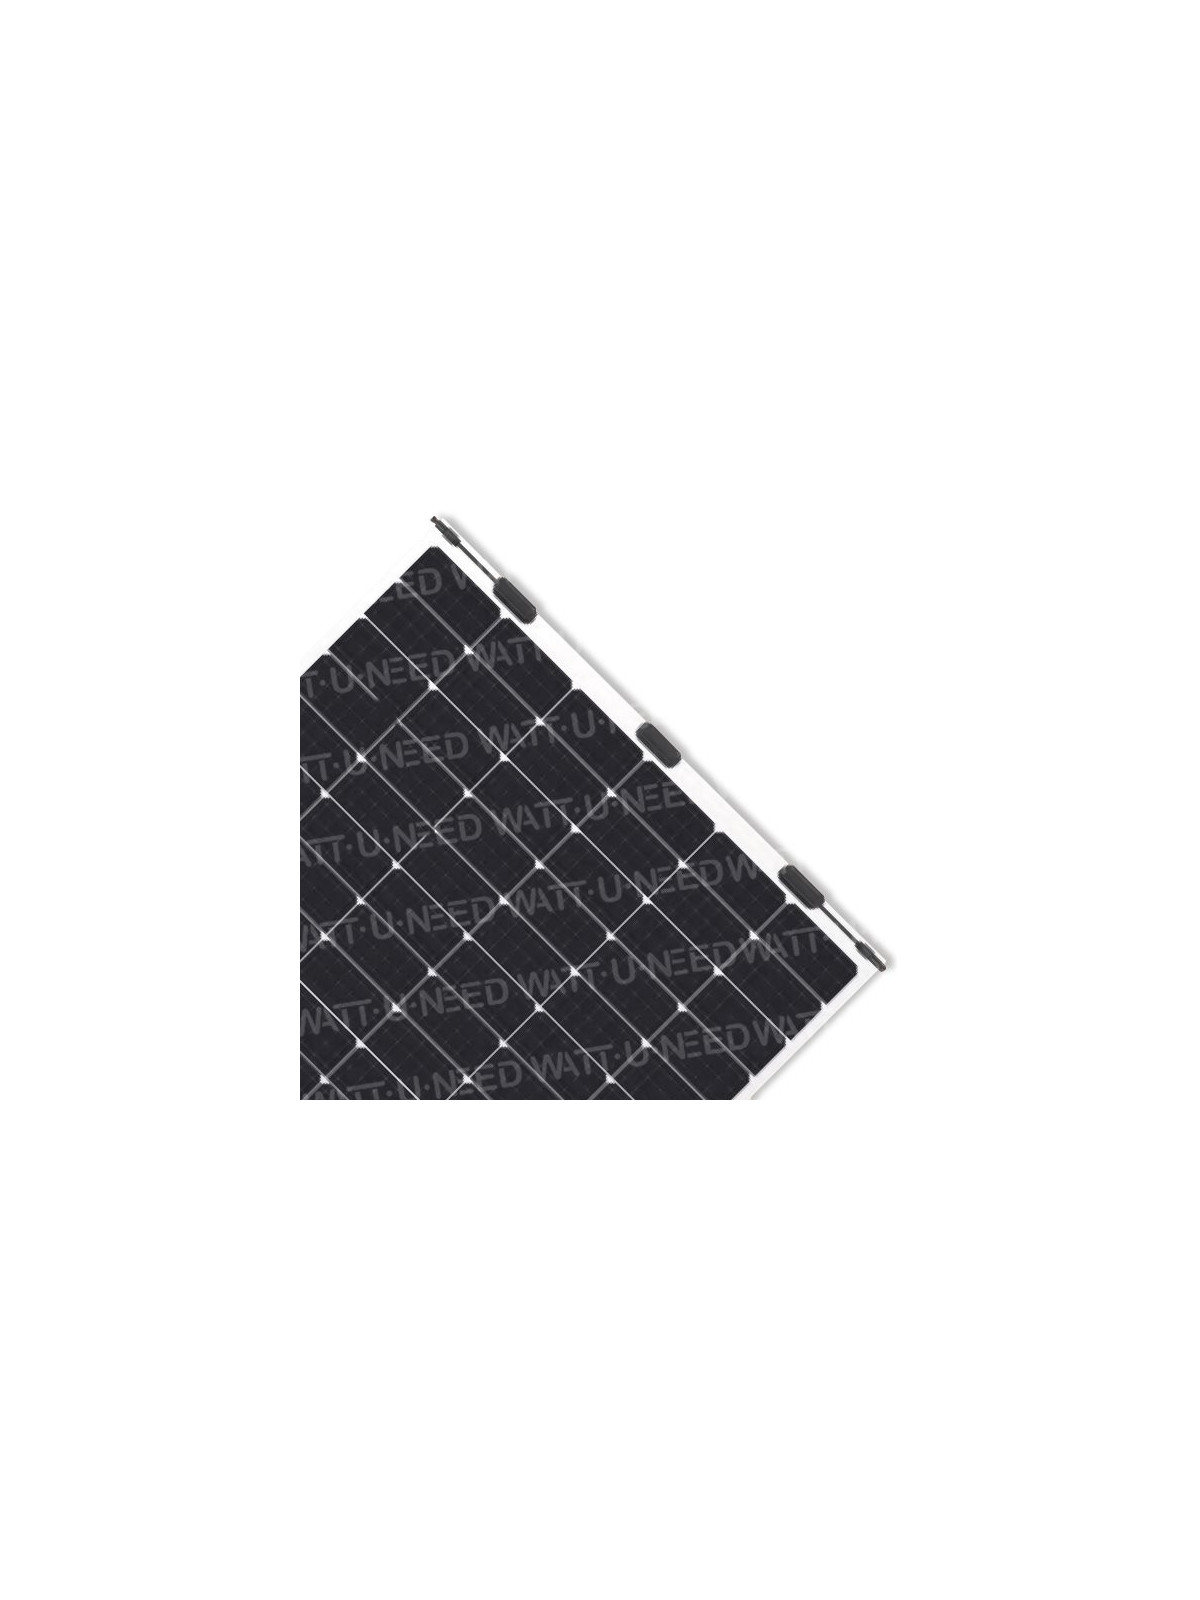 Solar panel 12V MX FLEX Protect 60Wc Full black